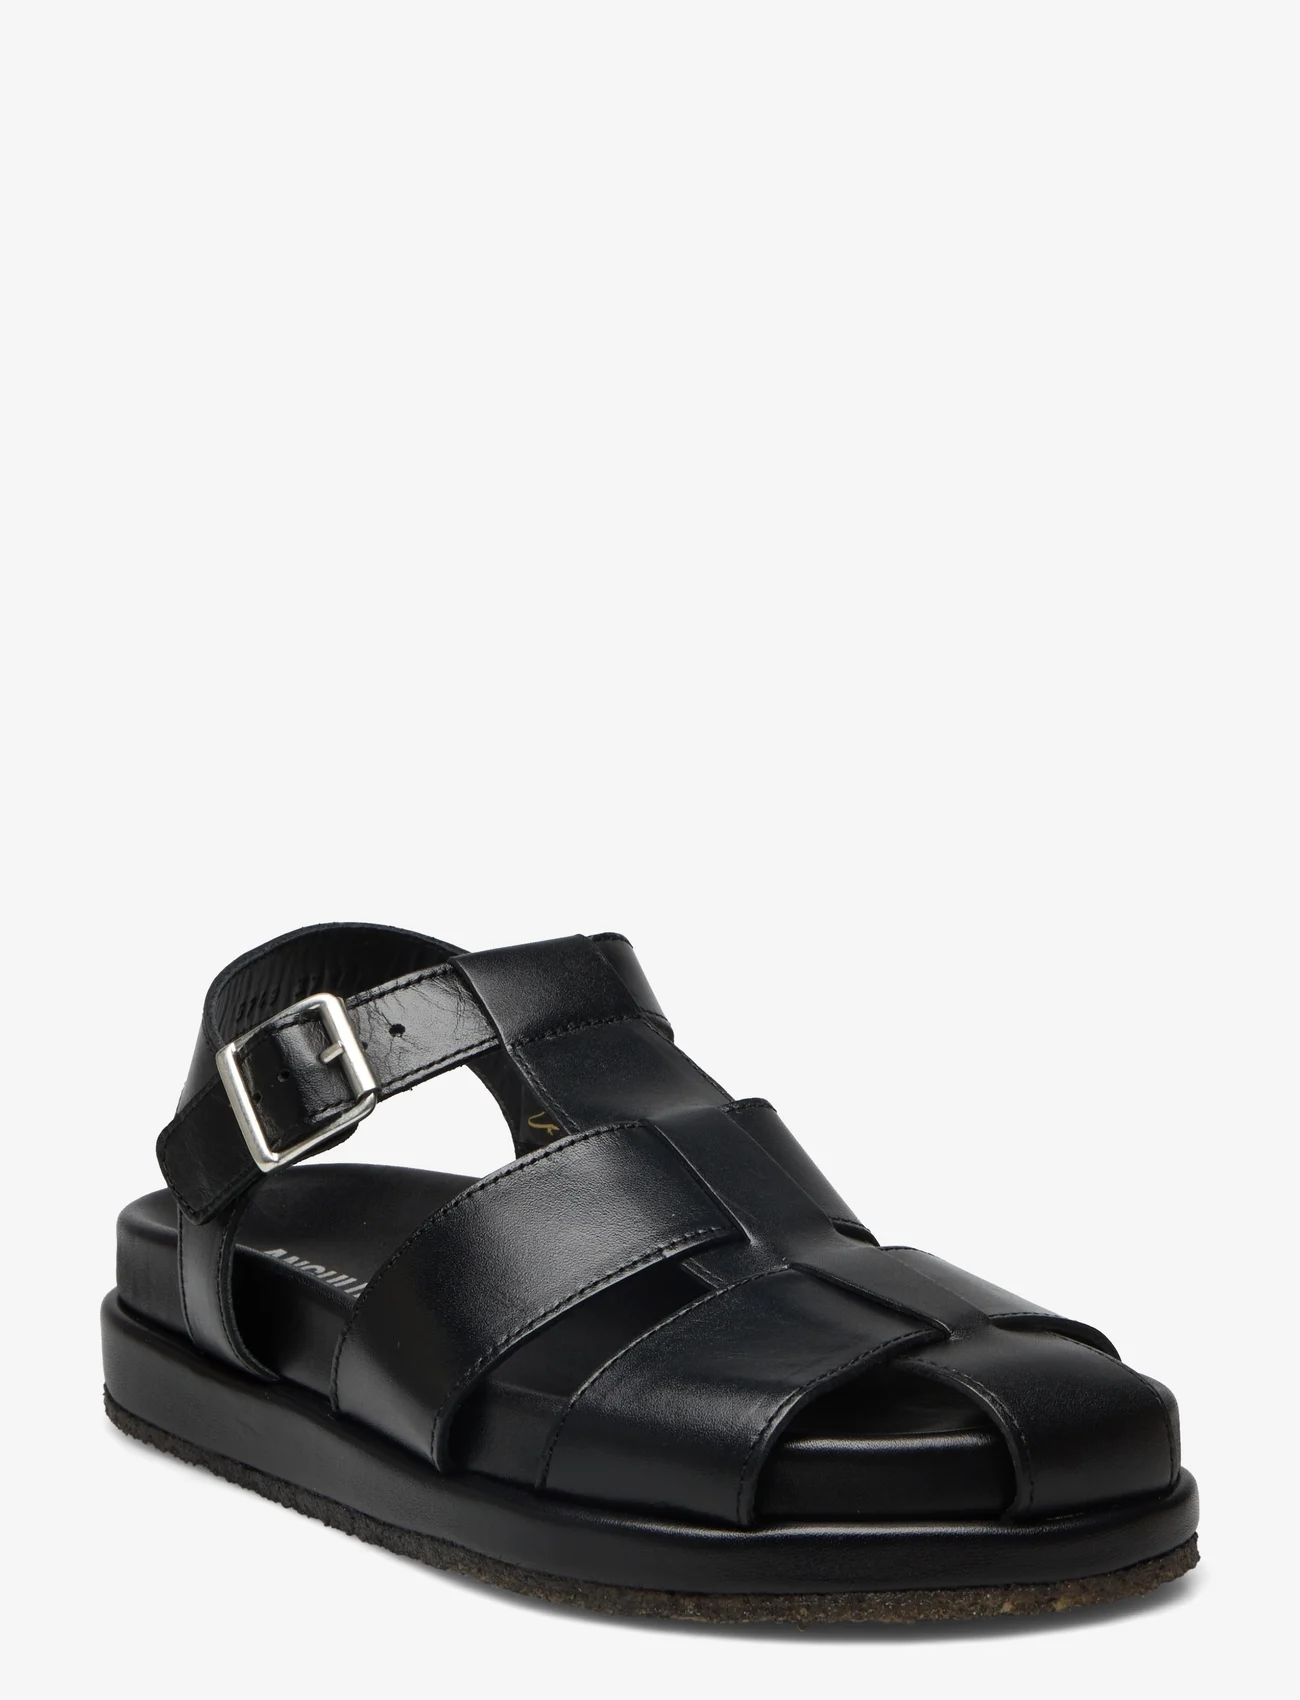 ANGULUS - Sandals - flat - open toe - op - płaskie sandały - 1604/1785 black - 0